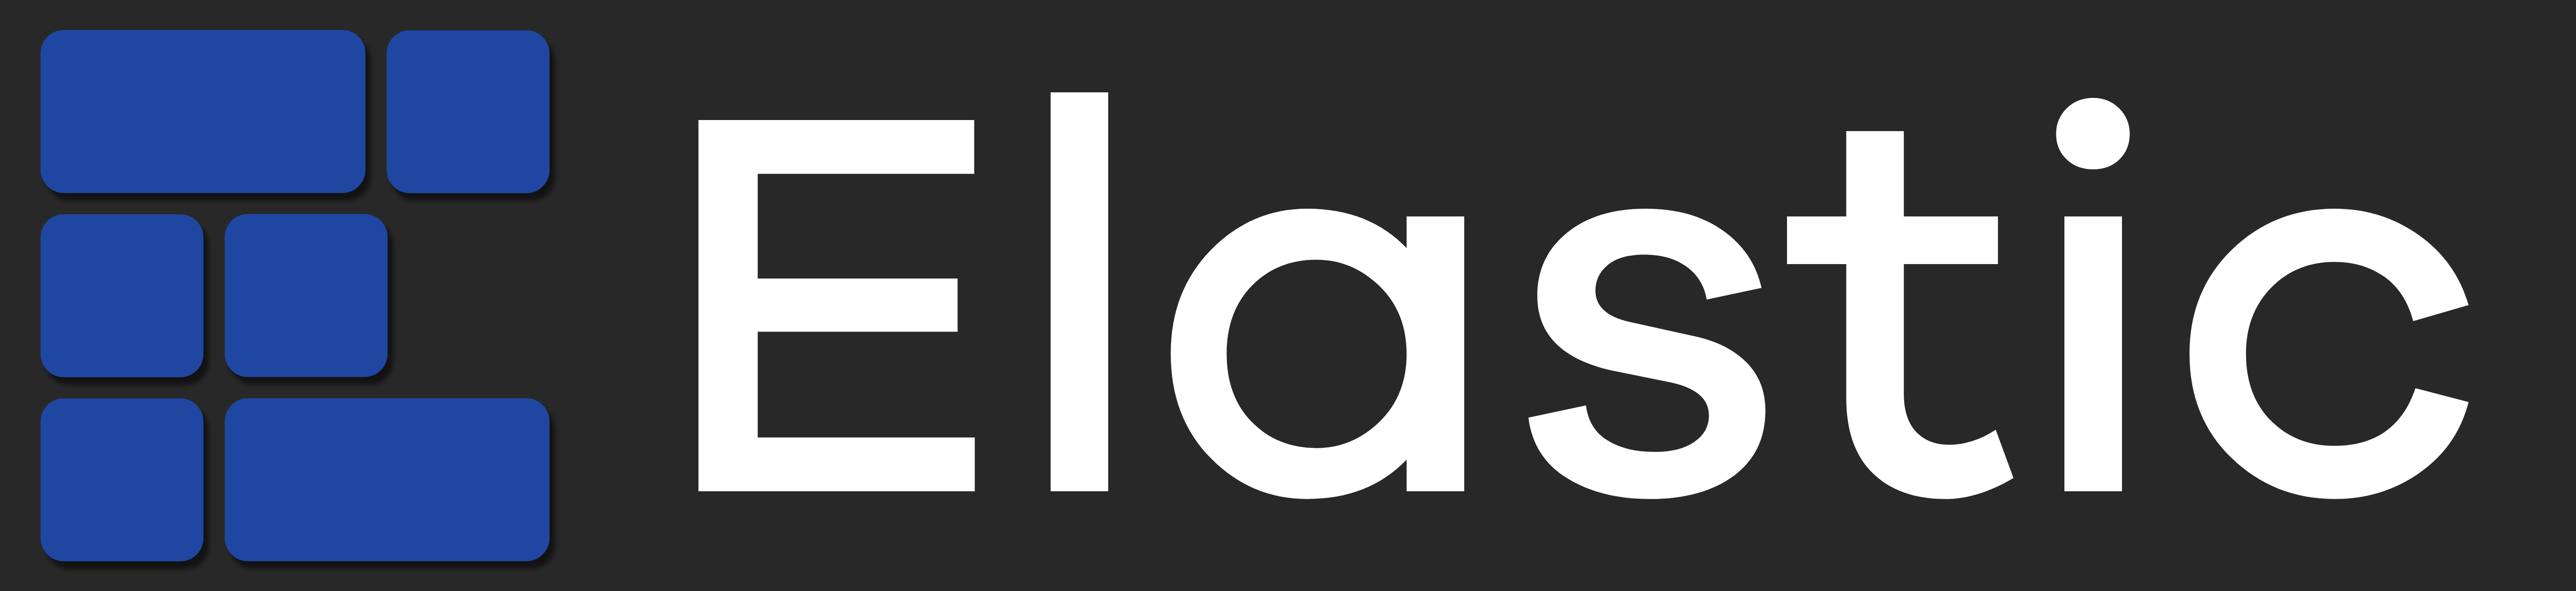 Elastic Logo